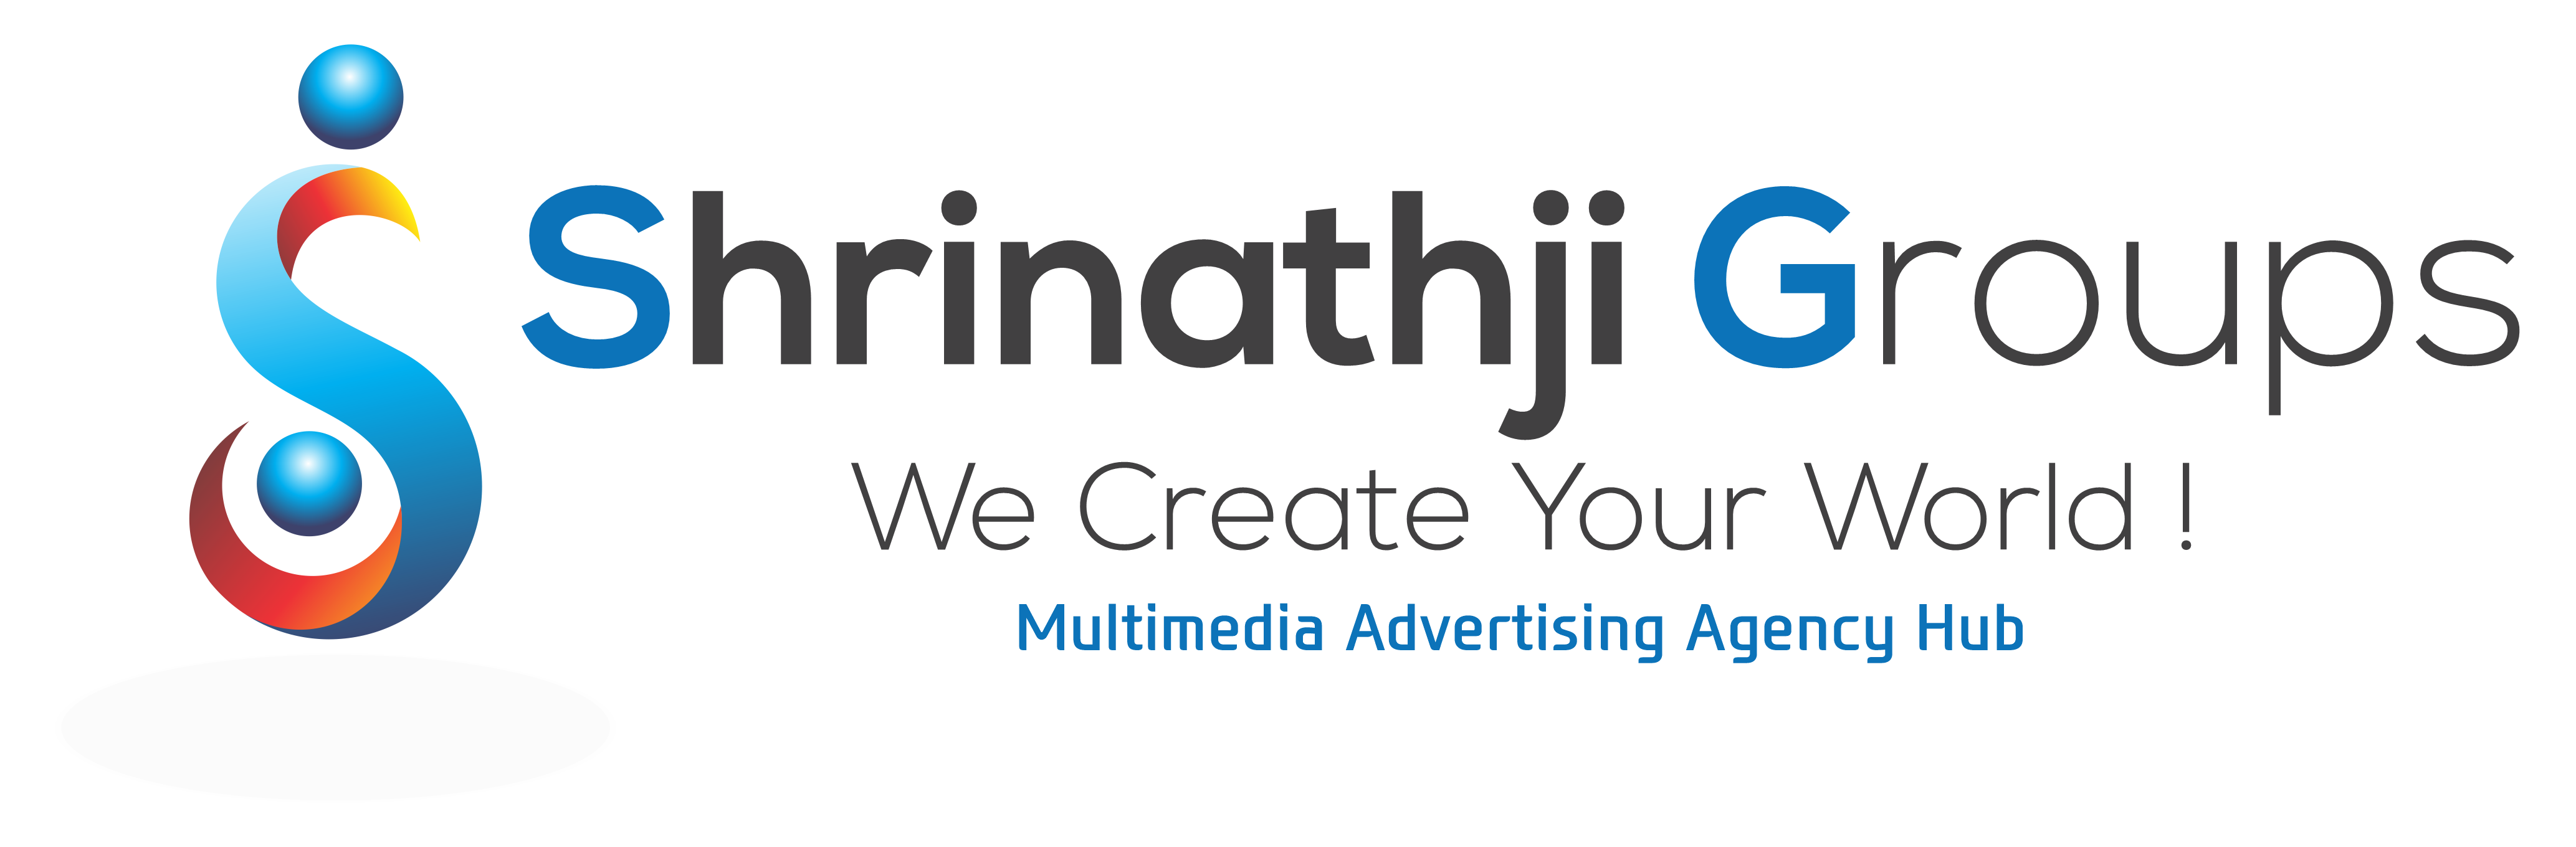 Web Site Logo - Shrinathji Groups